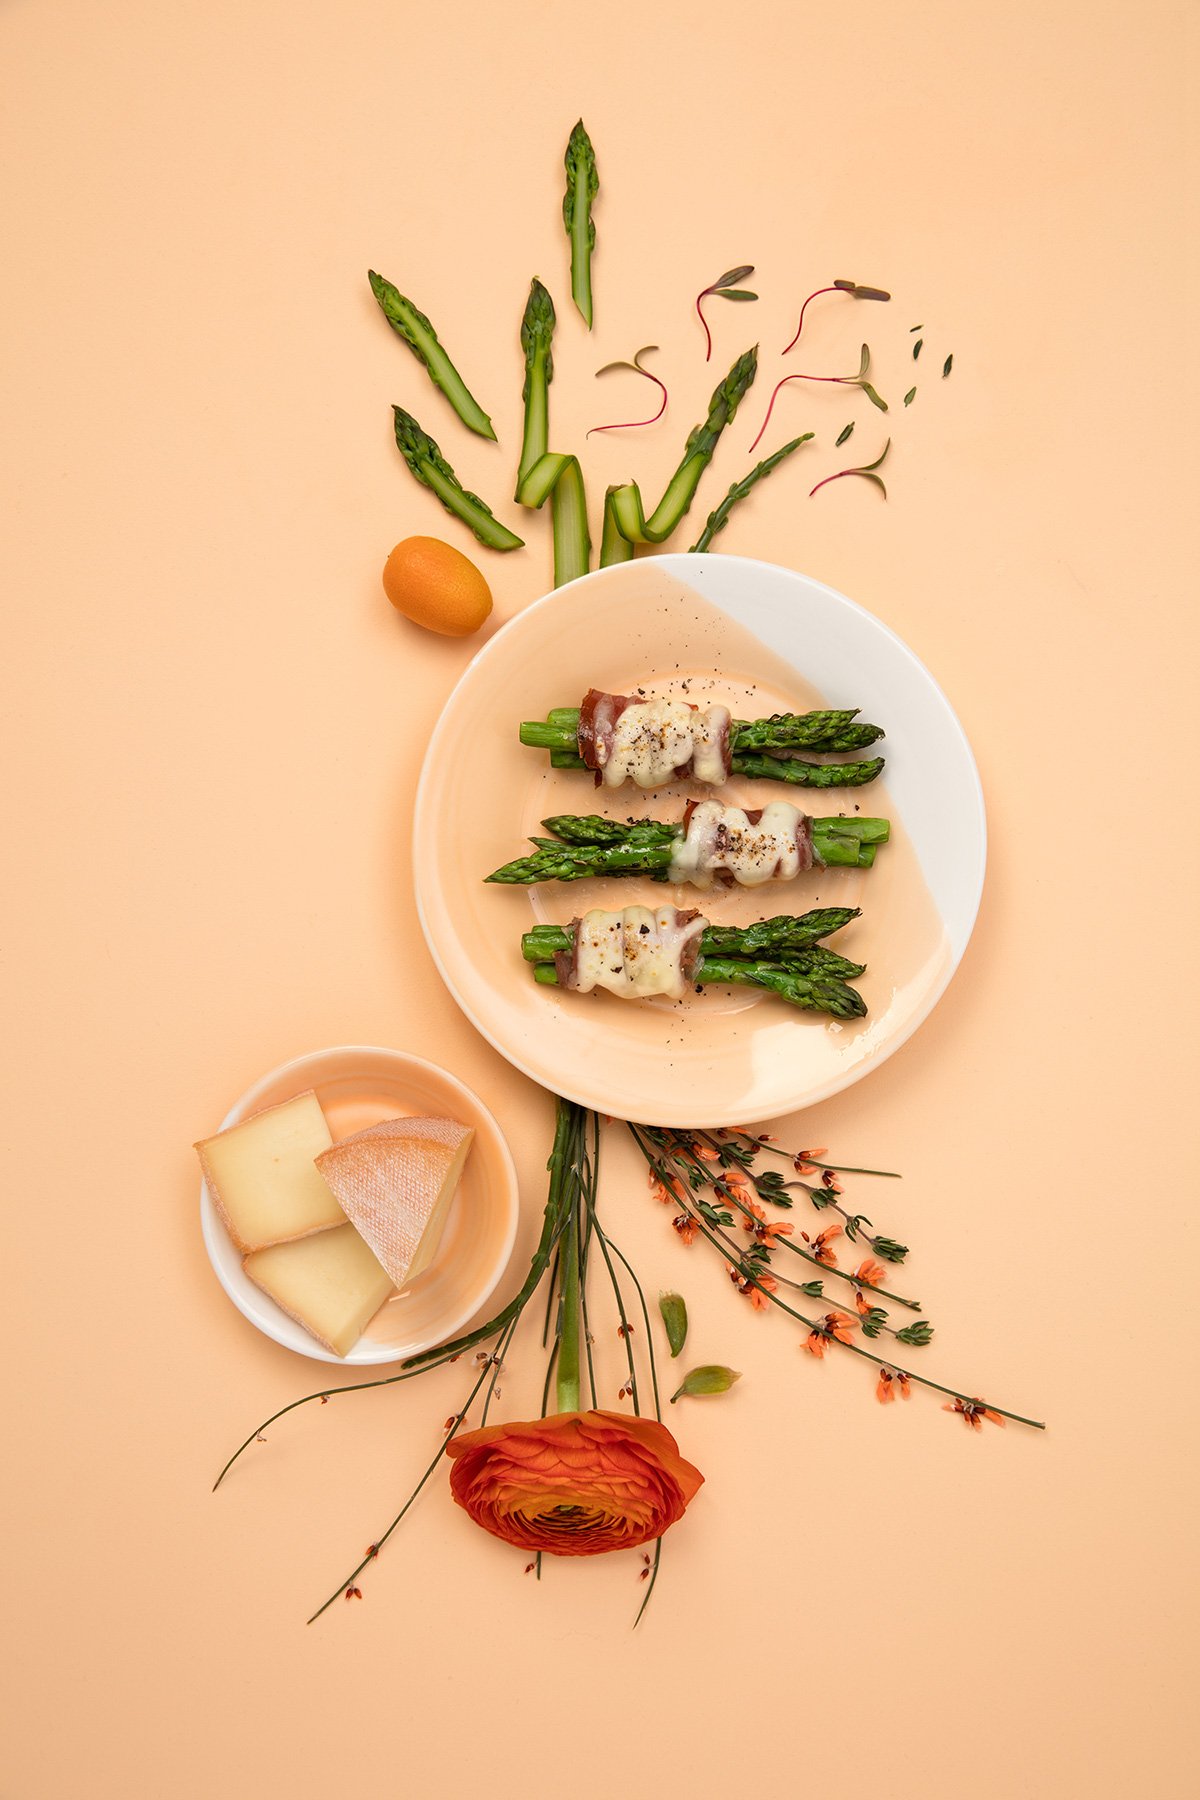 Les Garçons Crafts Visions of Spring Through Food